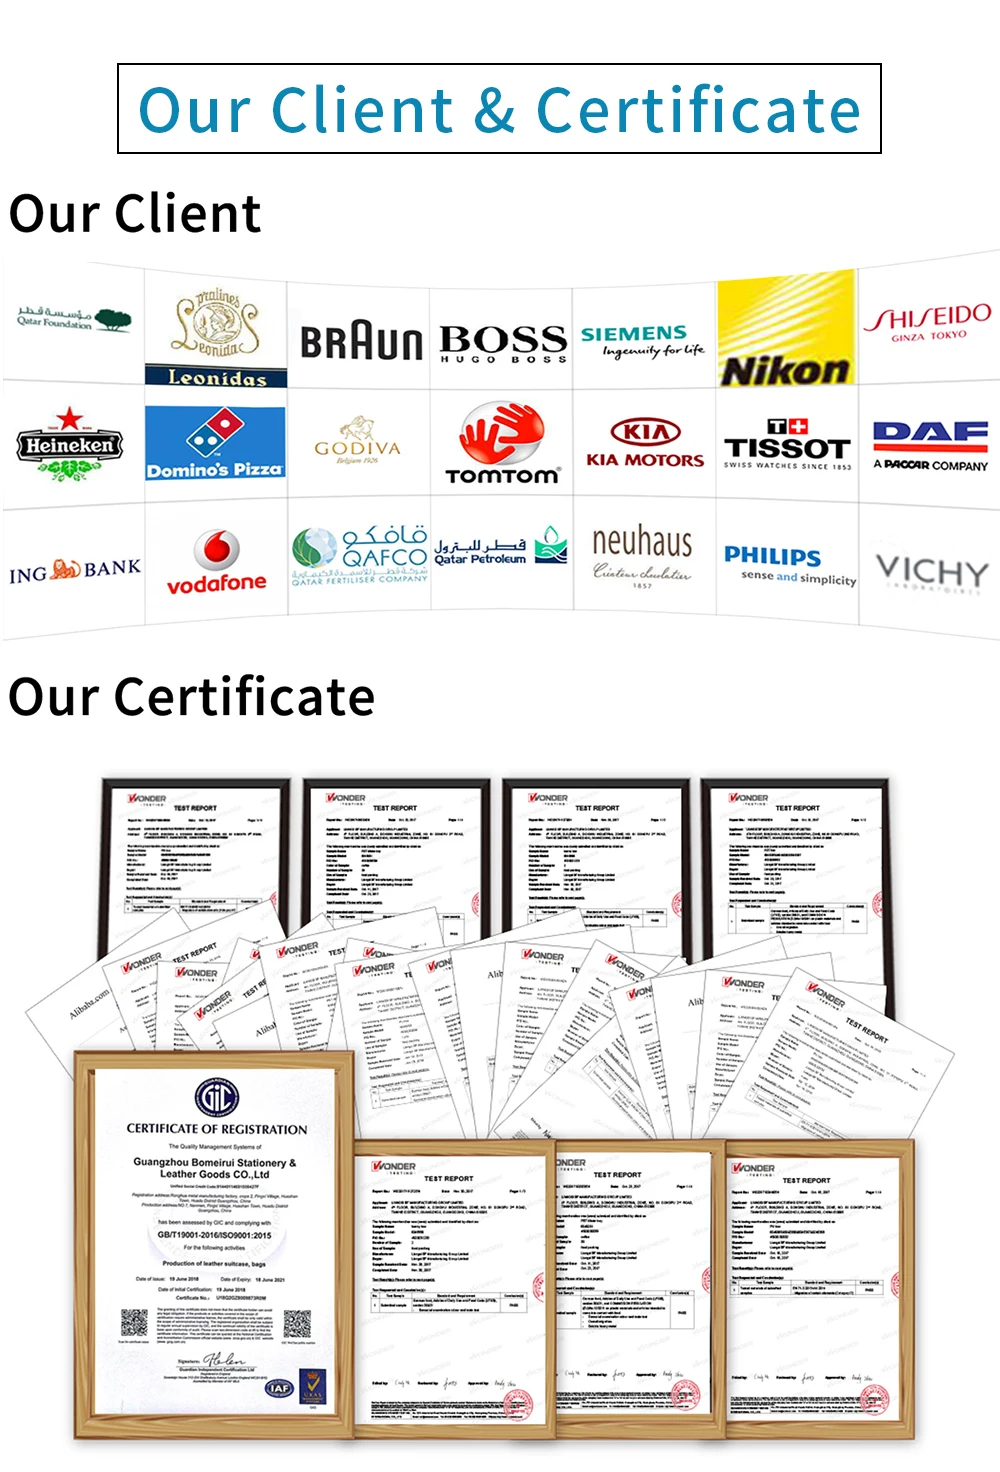 5-1 Clients & Certificate.jpg